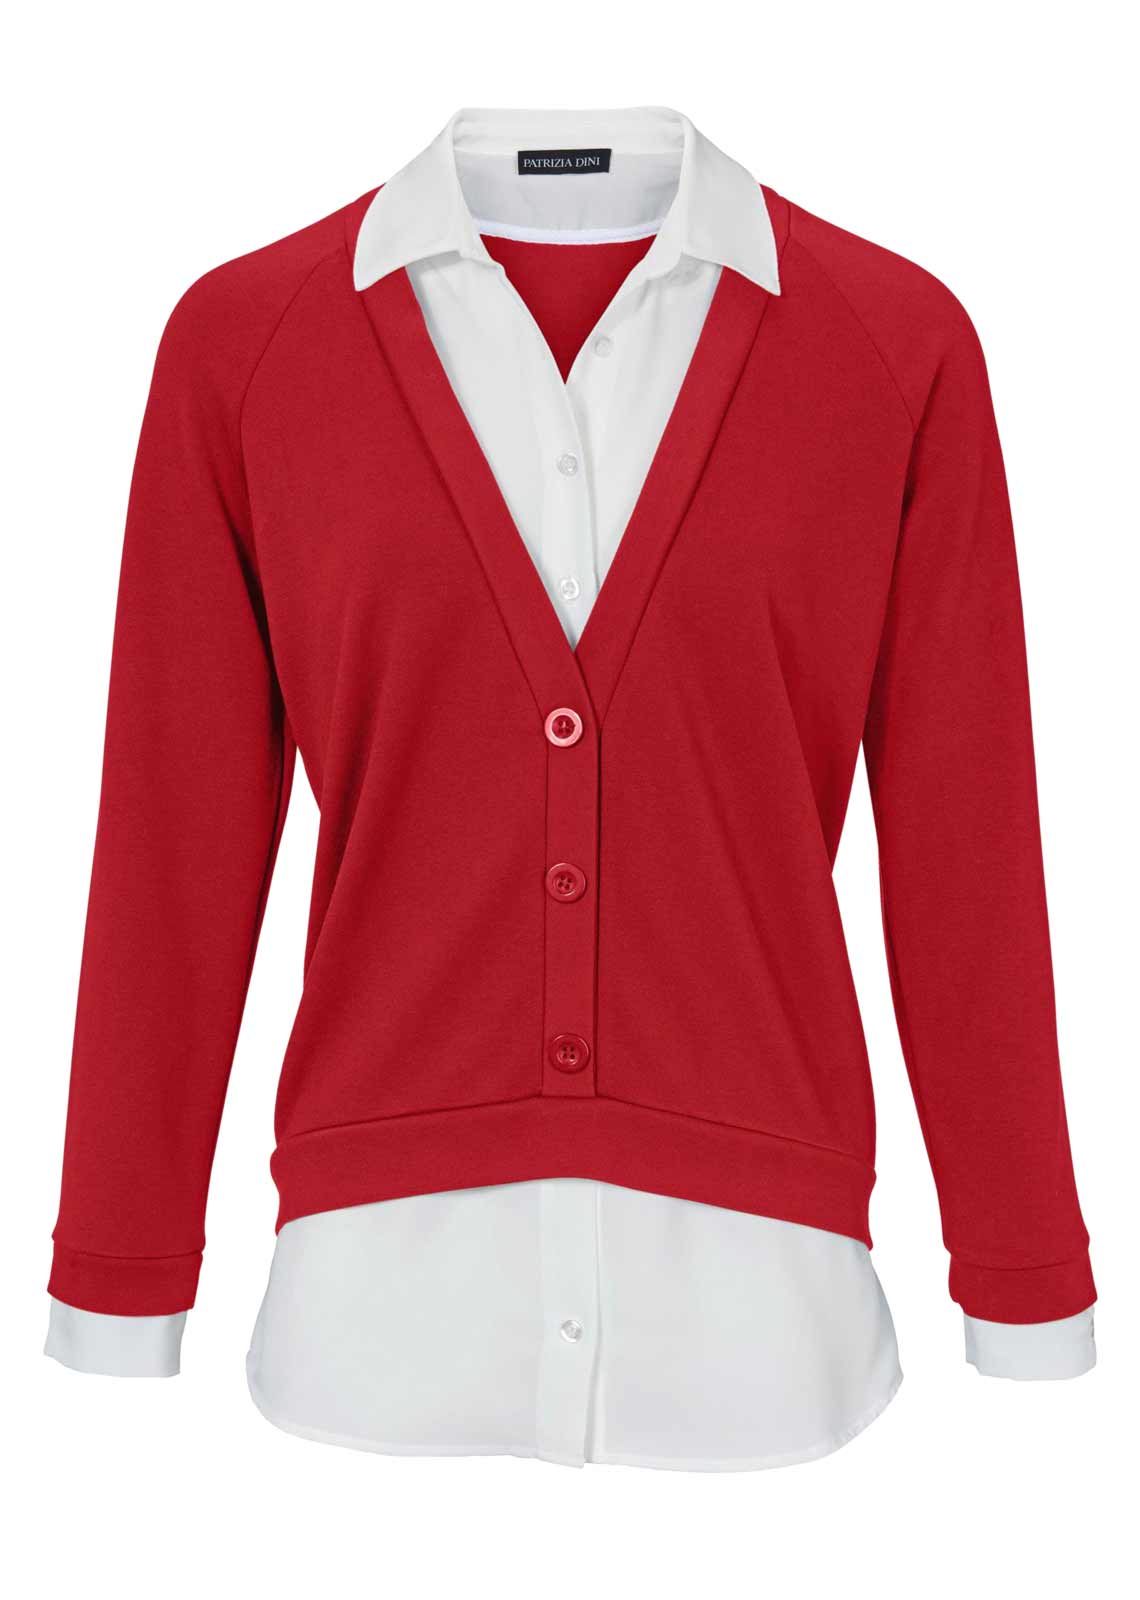 Patrizia Dini Damen Designer-2-in-1-Blusenshirt, rot-weiß